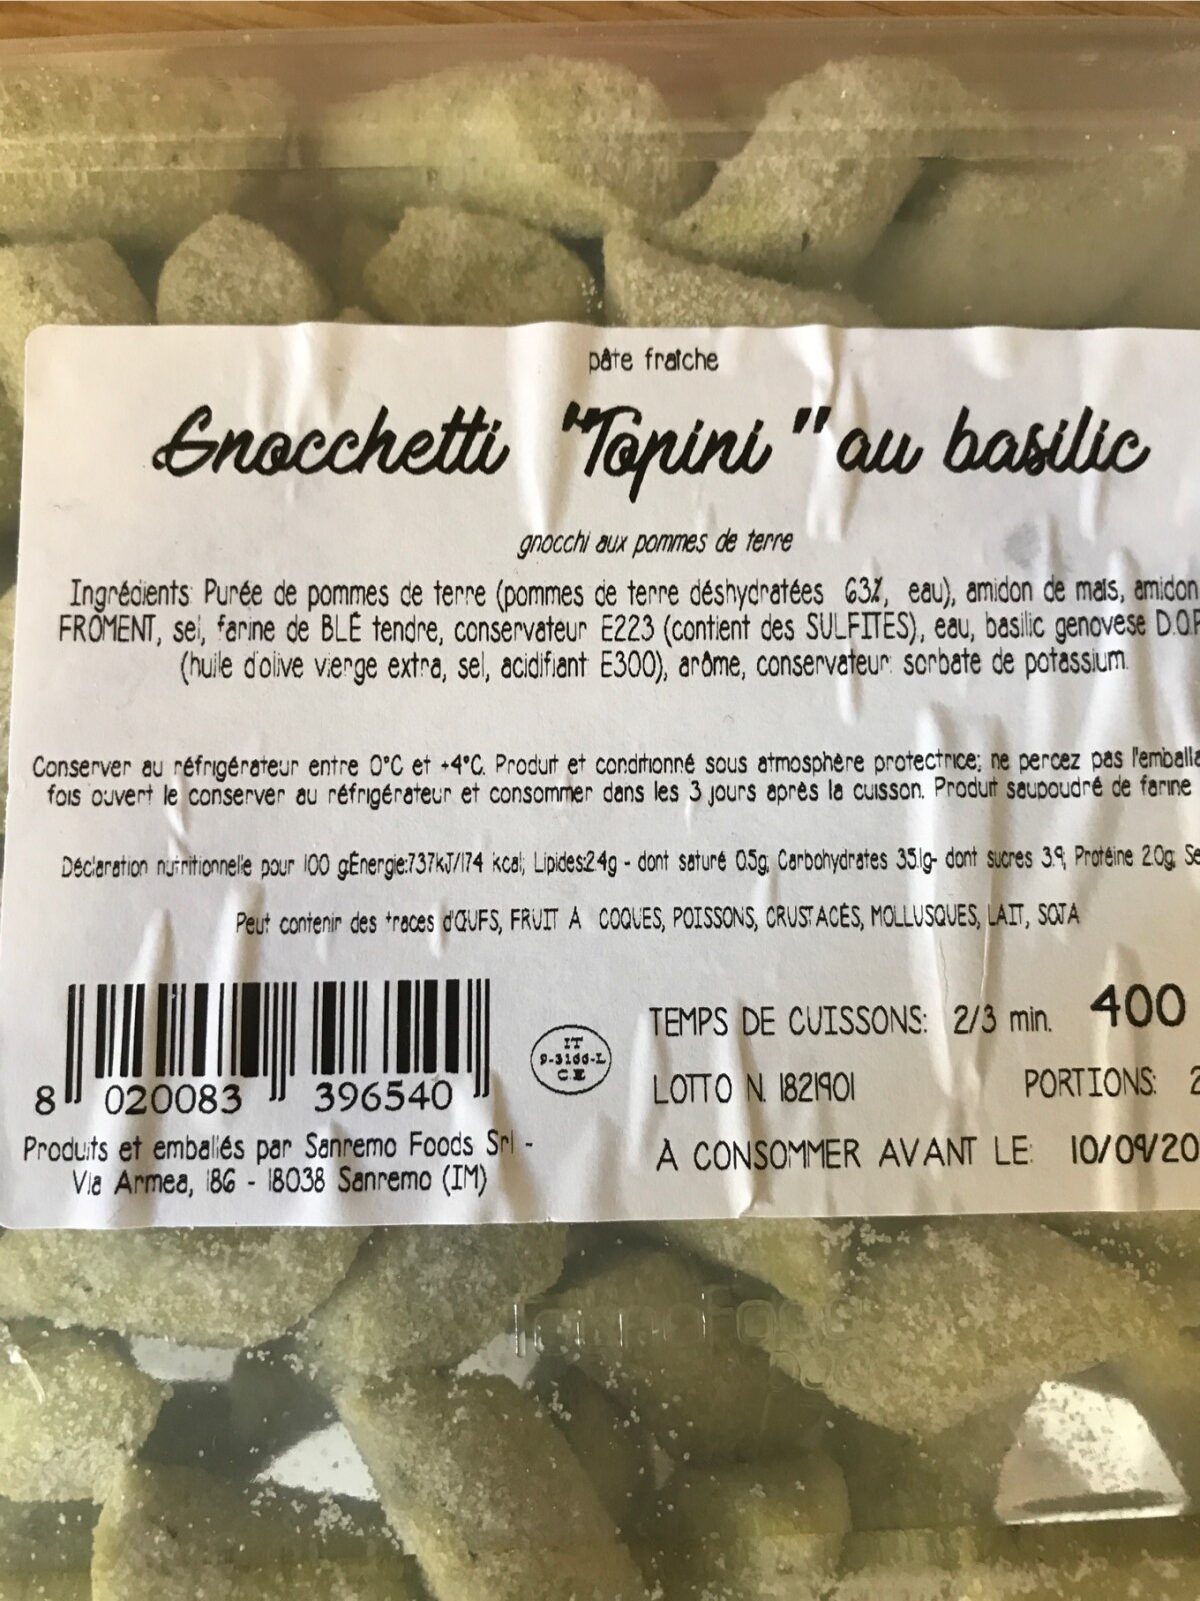 Gnocchetti topini au basilic - Ingredients - fr